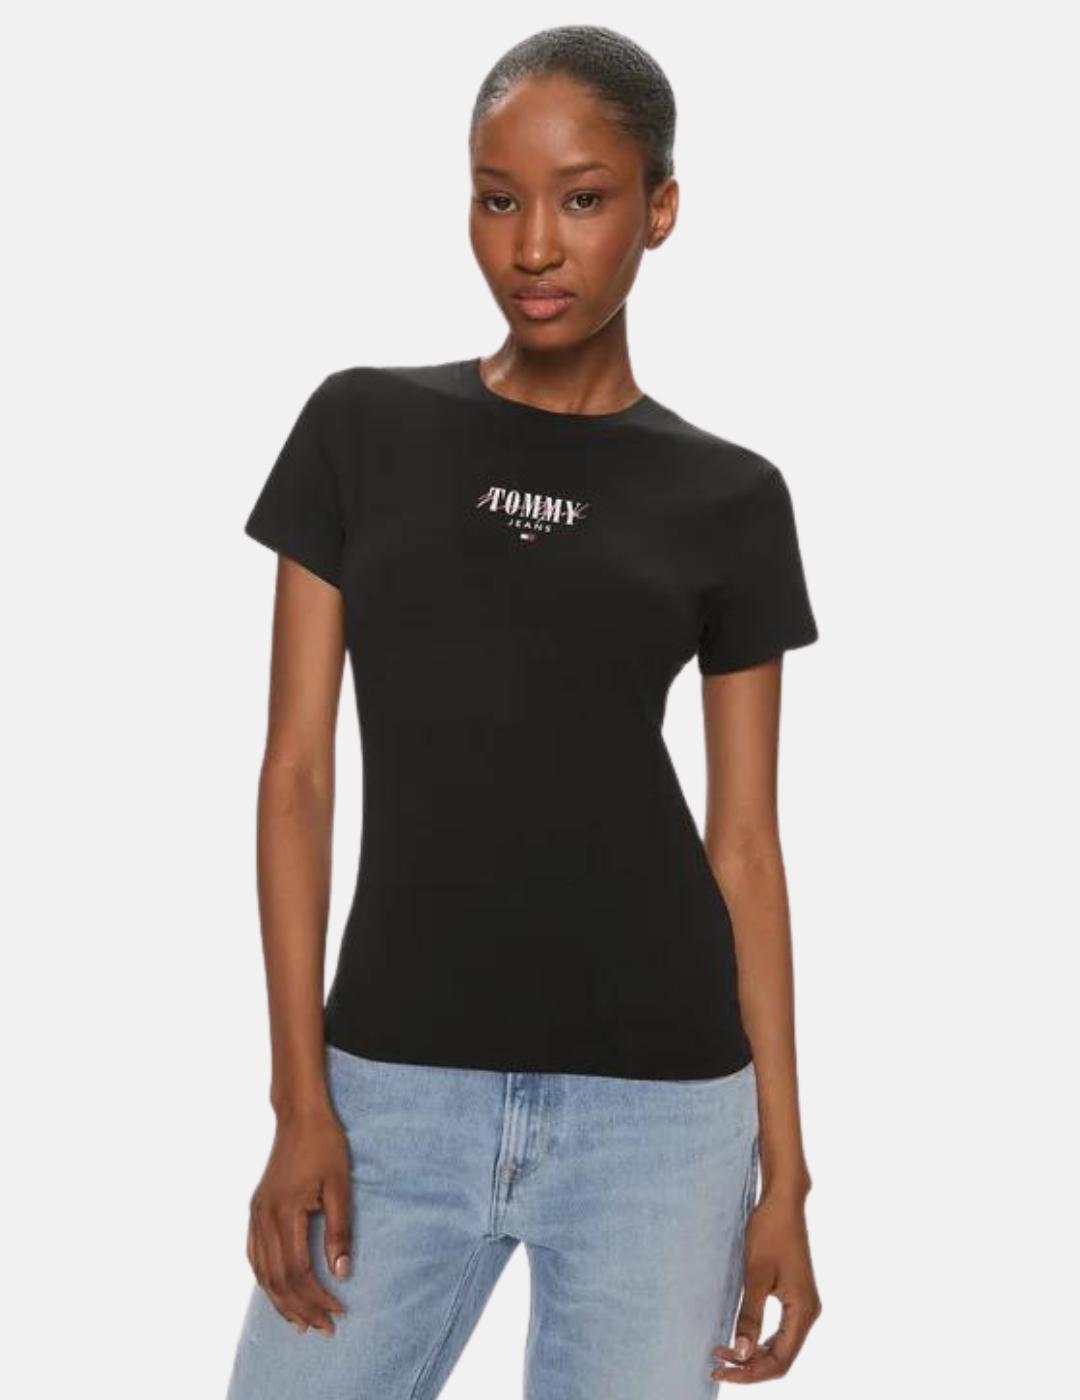 Camiseta Tommy Jeans negra basic mujer